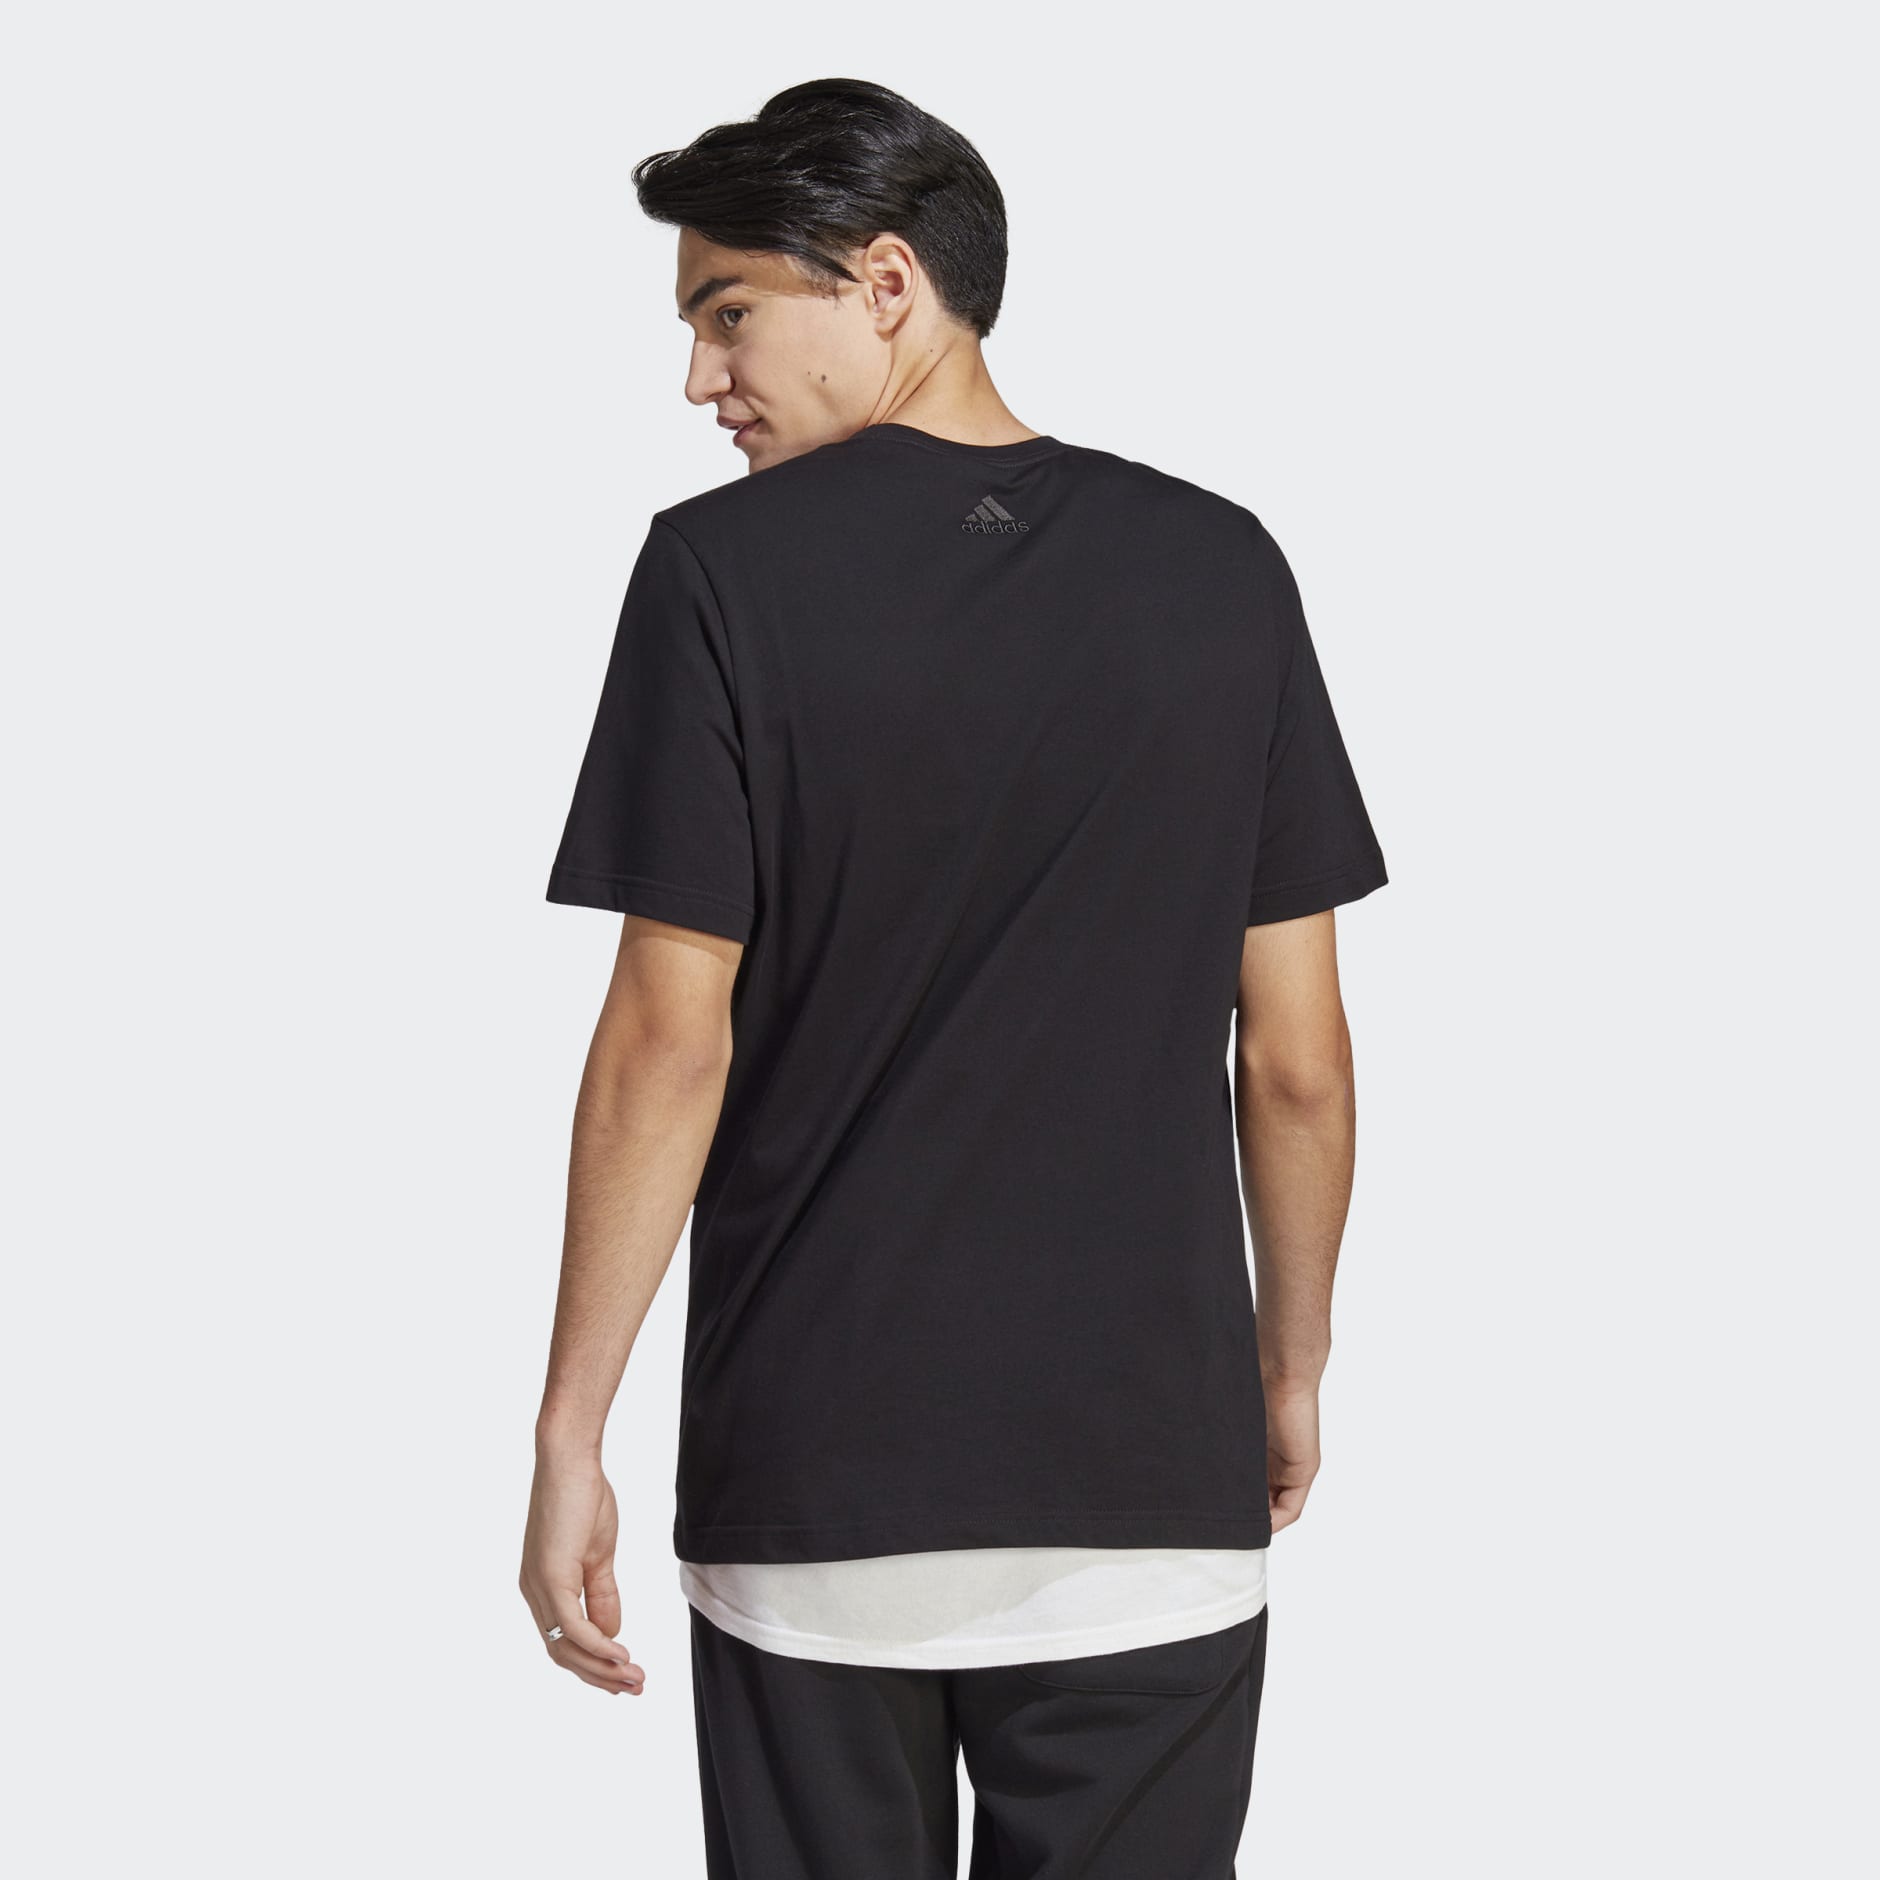 Men\'s Clothing - Essentials Single Linear Saudi Arabia | adidas - Tee Black Jersey Embroidered Logo